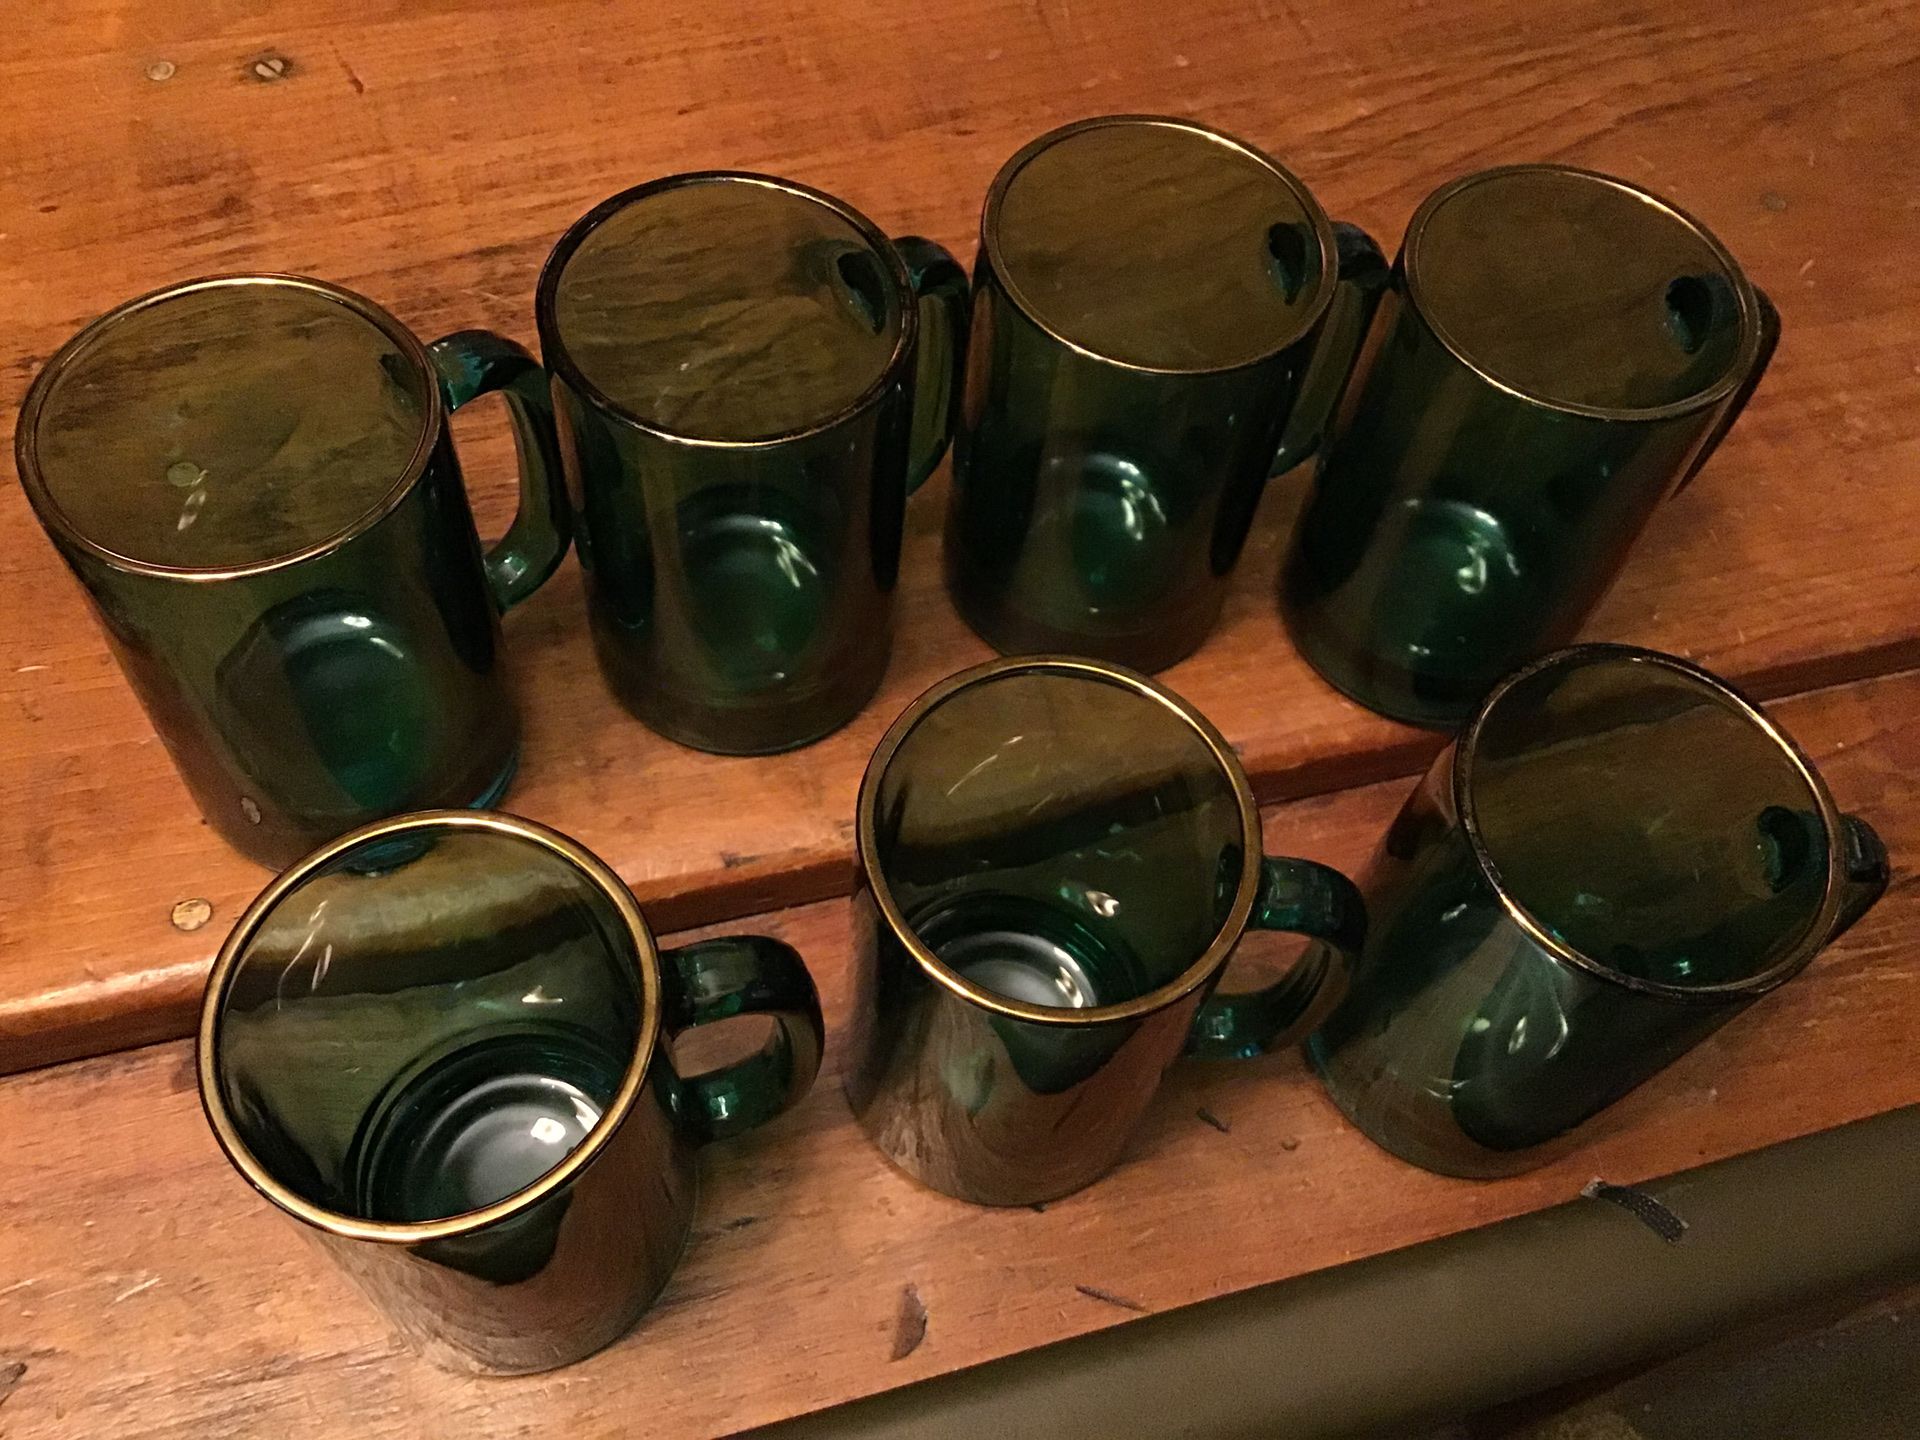 Drinking mugs